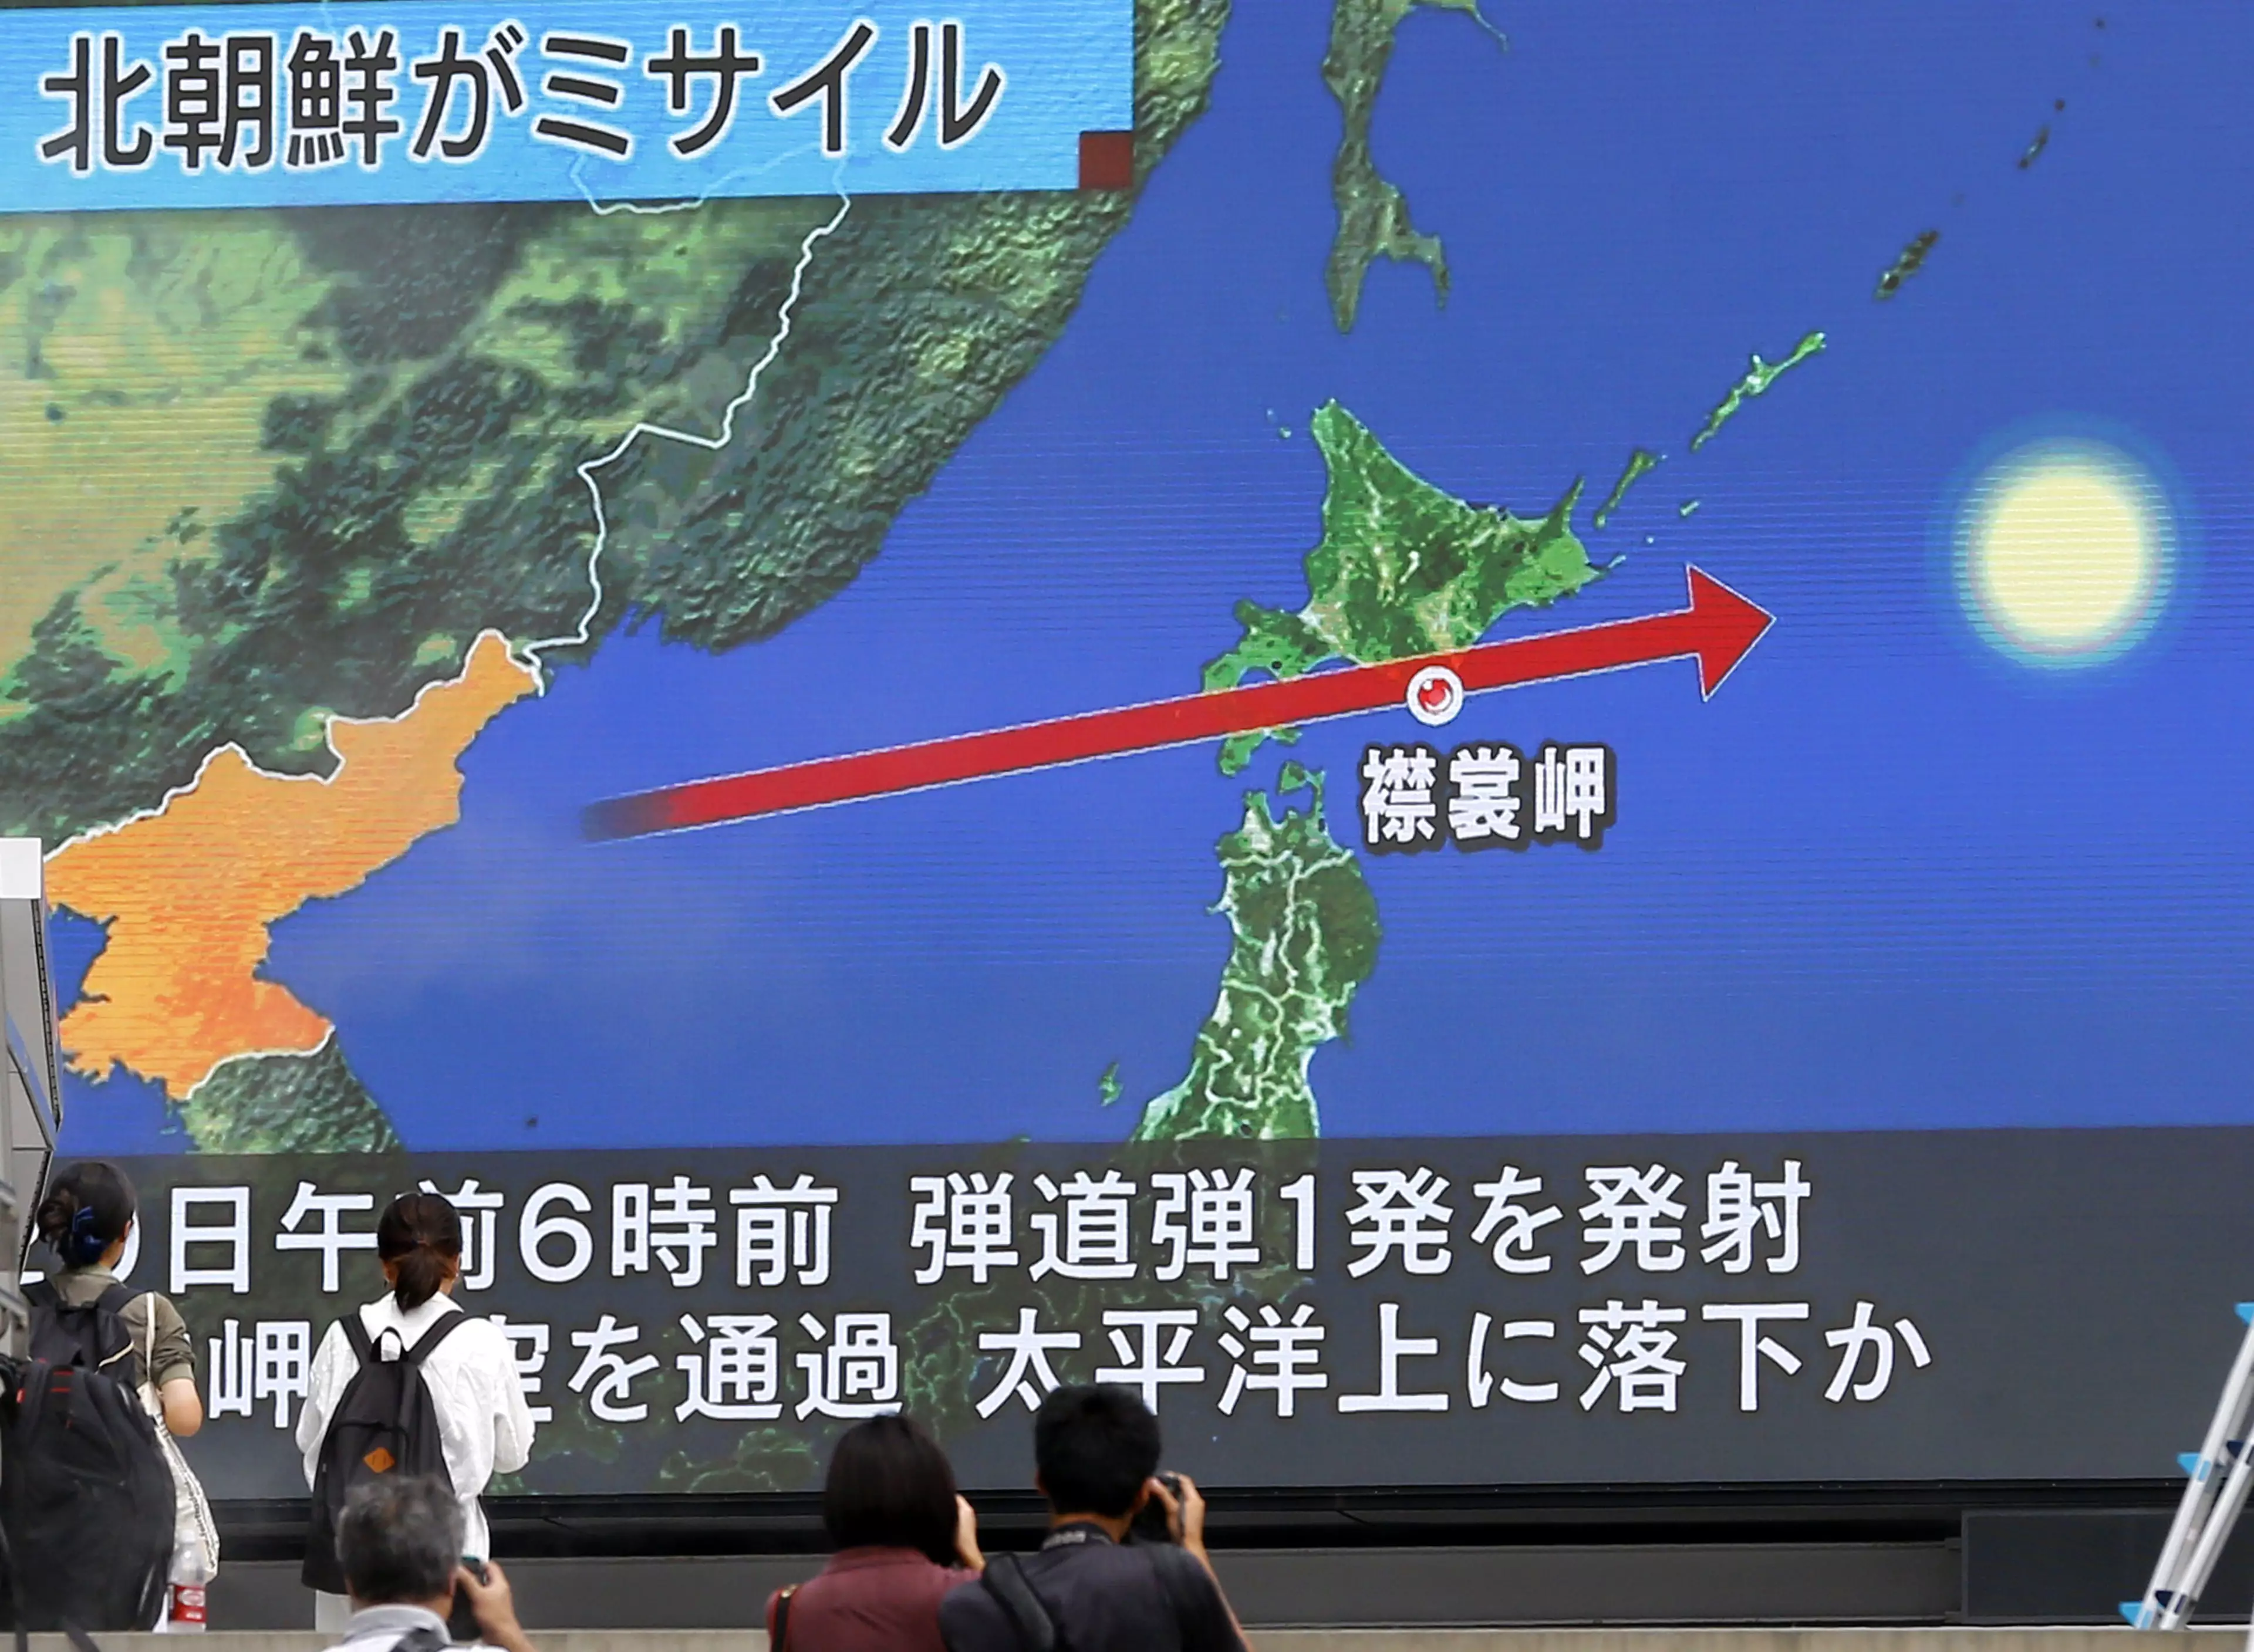 TV news showing North Korean missile